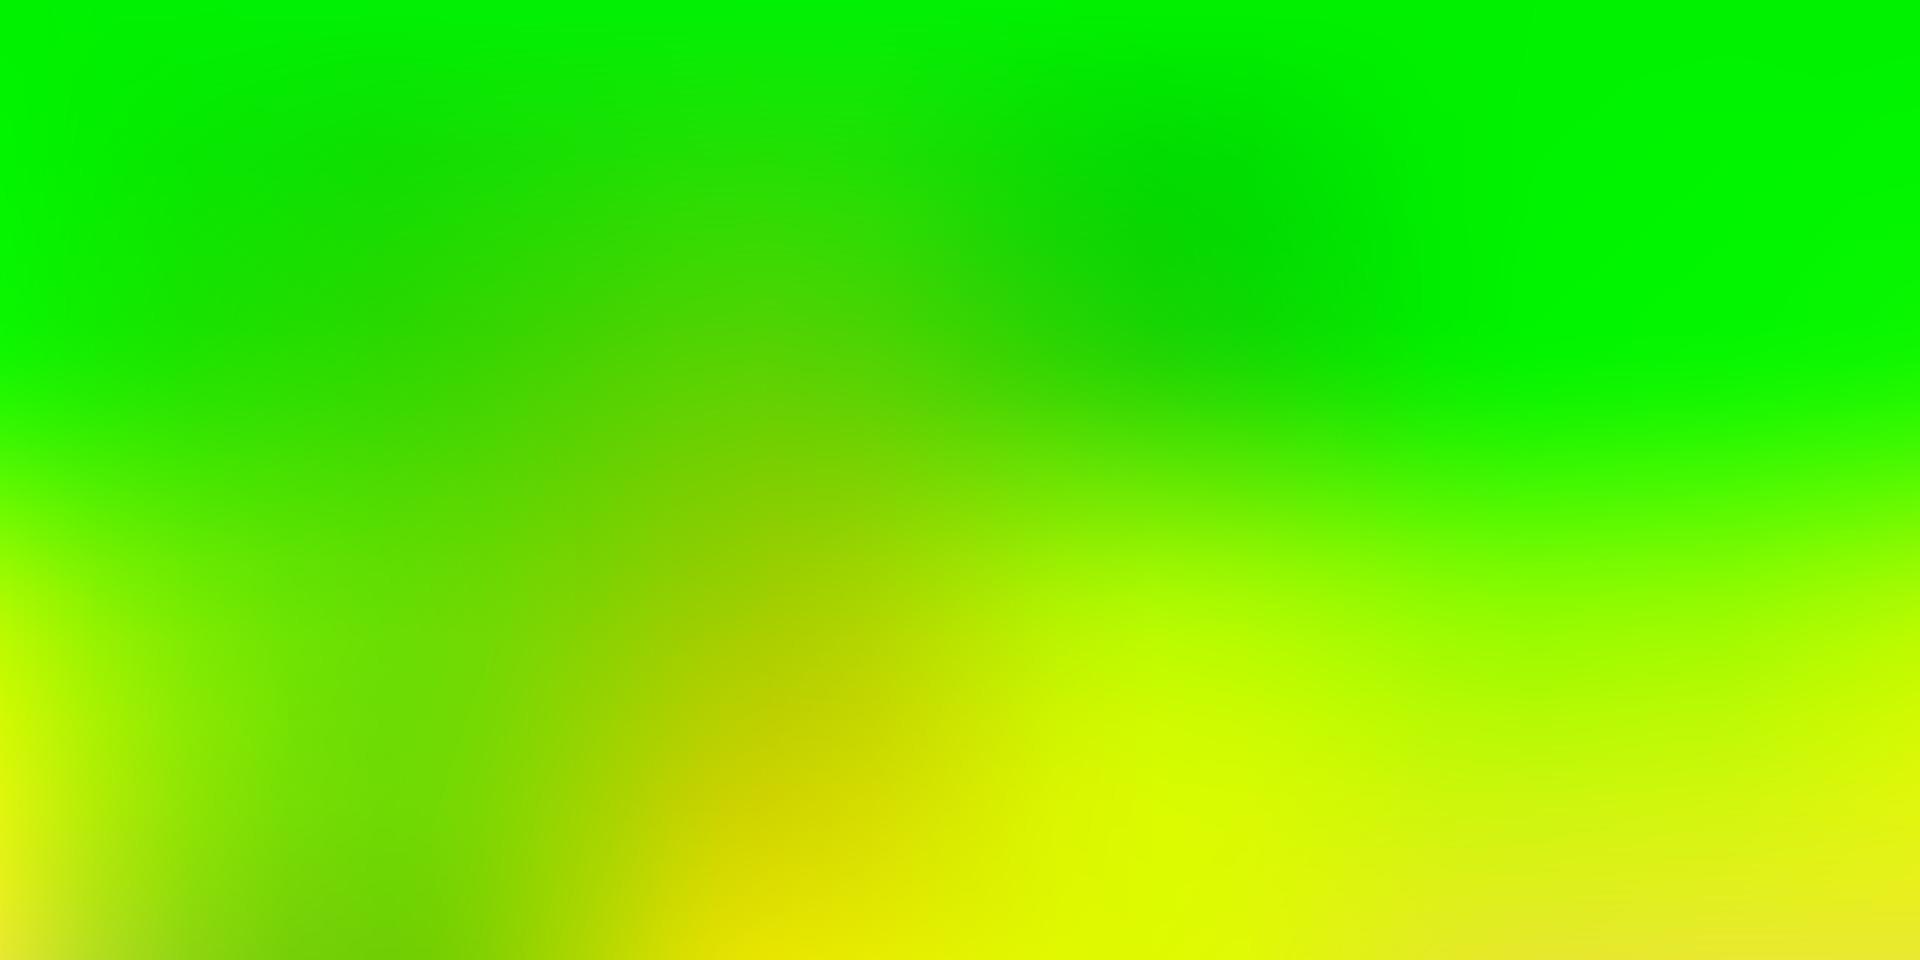 Dark Green, Yellow vector gradient blur template.